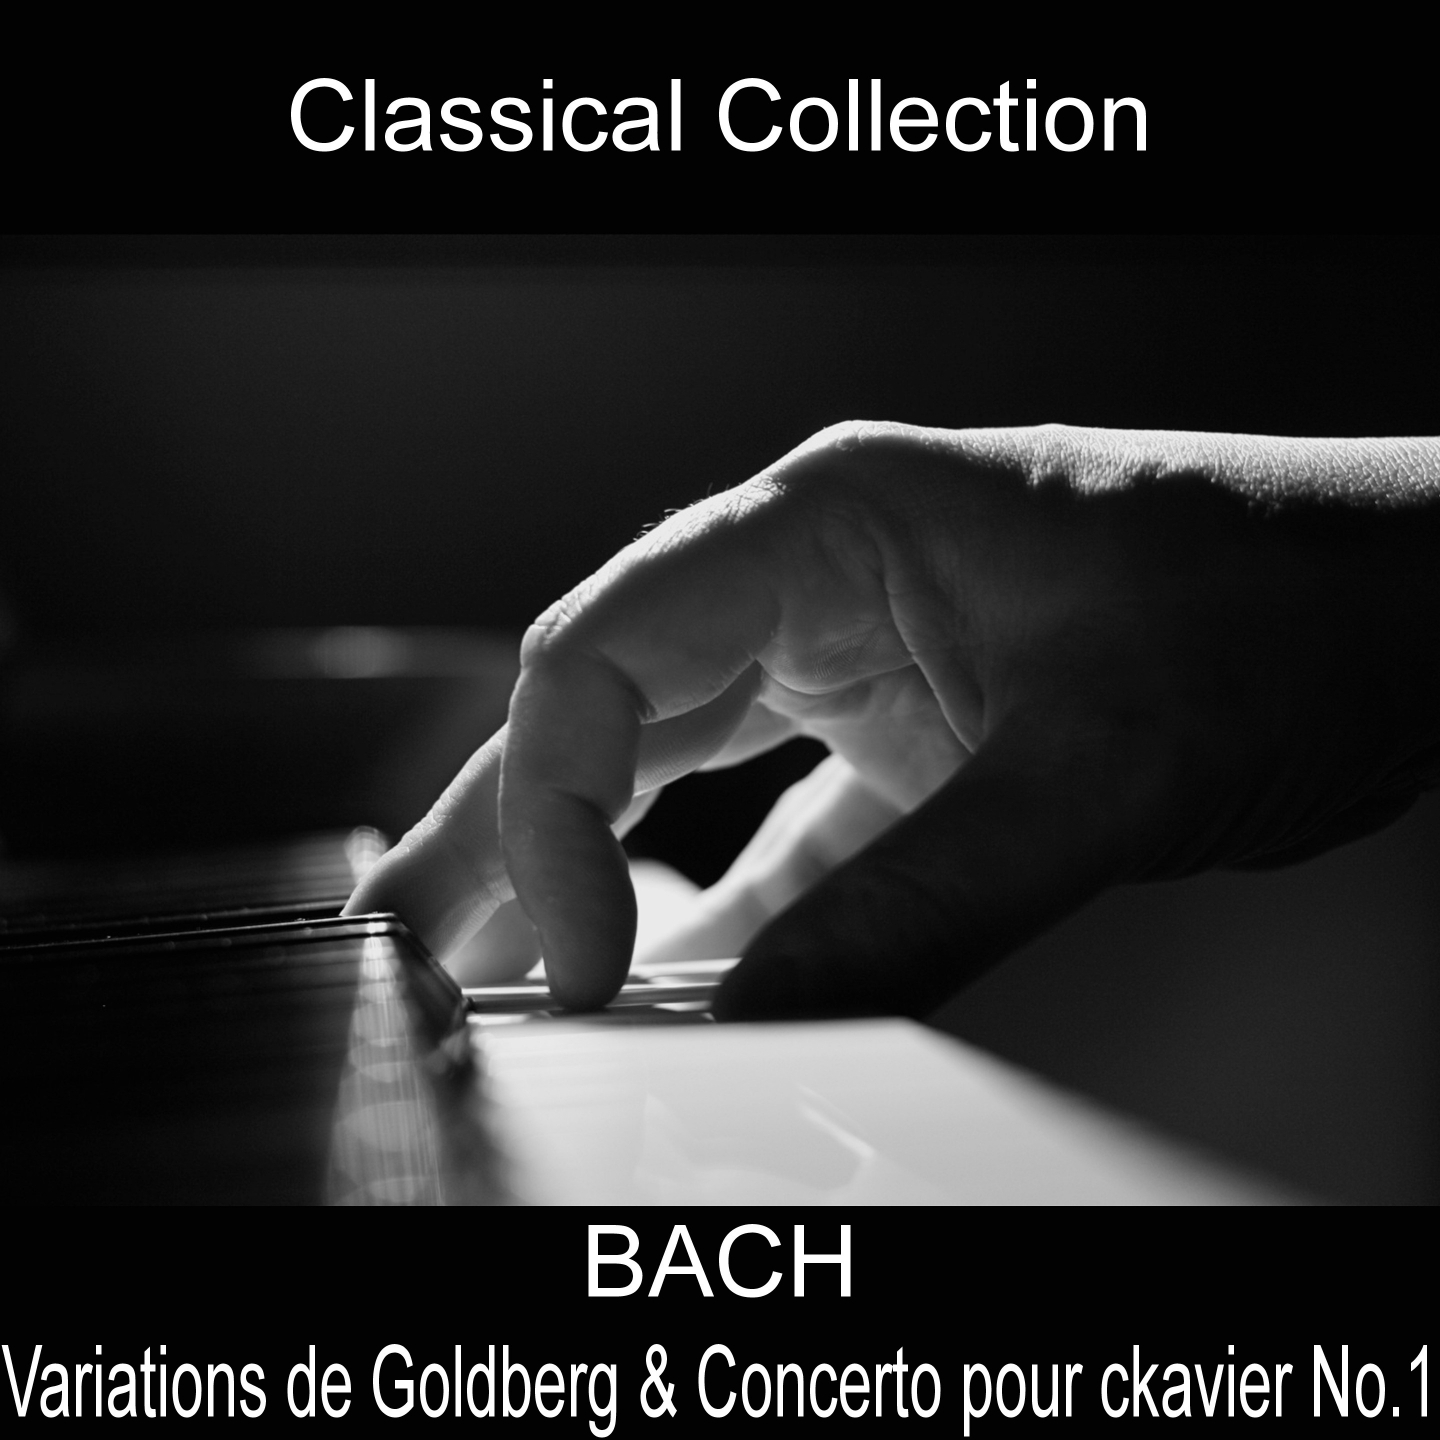 Concerto pour Clavier No. 1 in D Minor, BWV 1052: III. Allegro